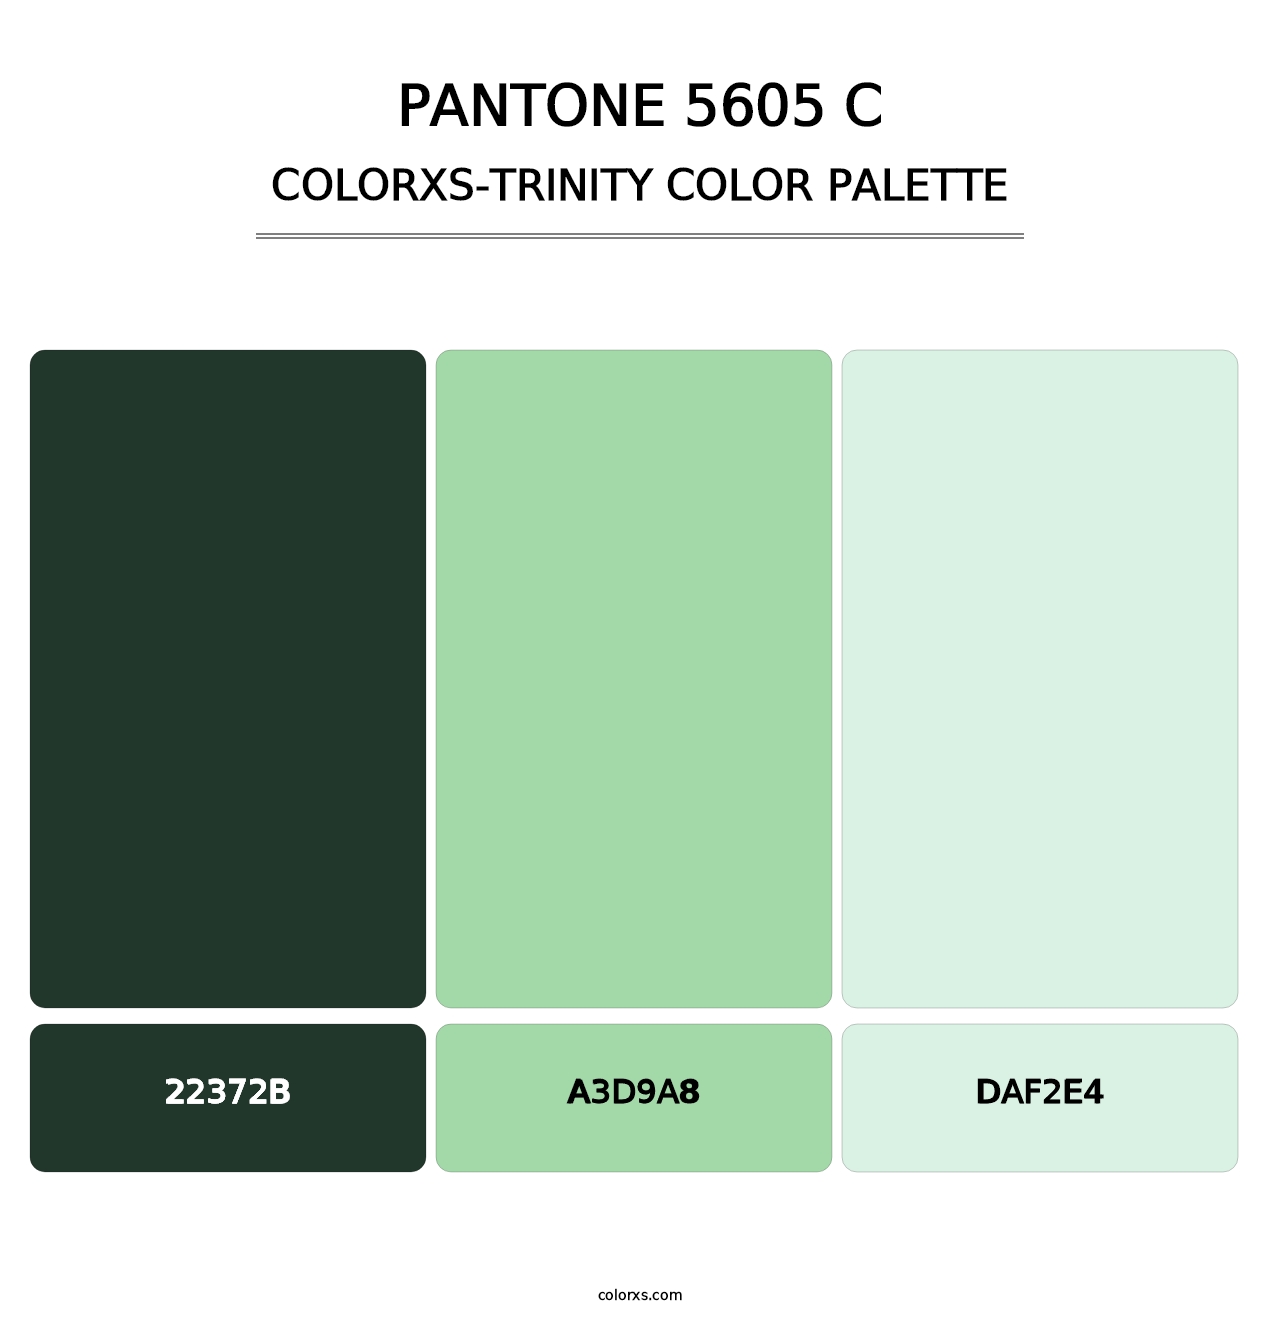 PANTONE 5605 C - Colorxs Trinity Palette